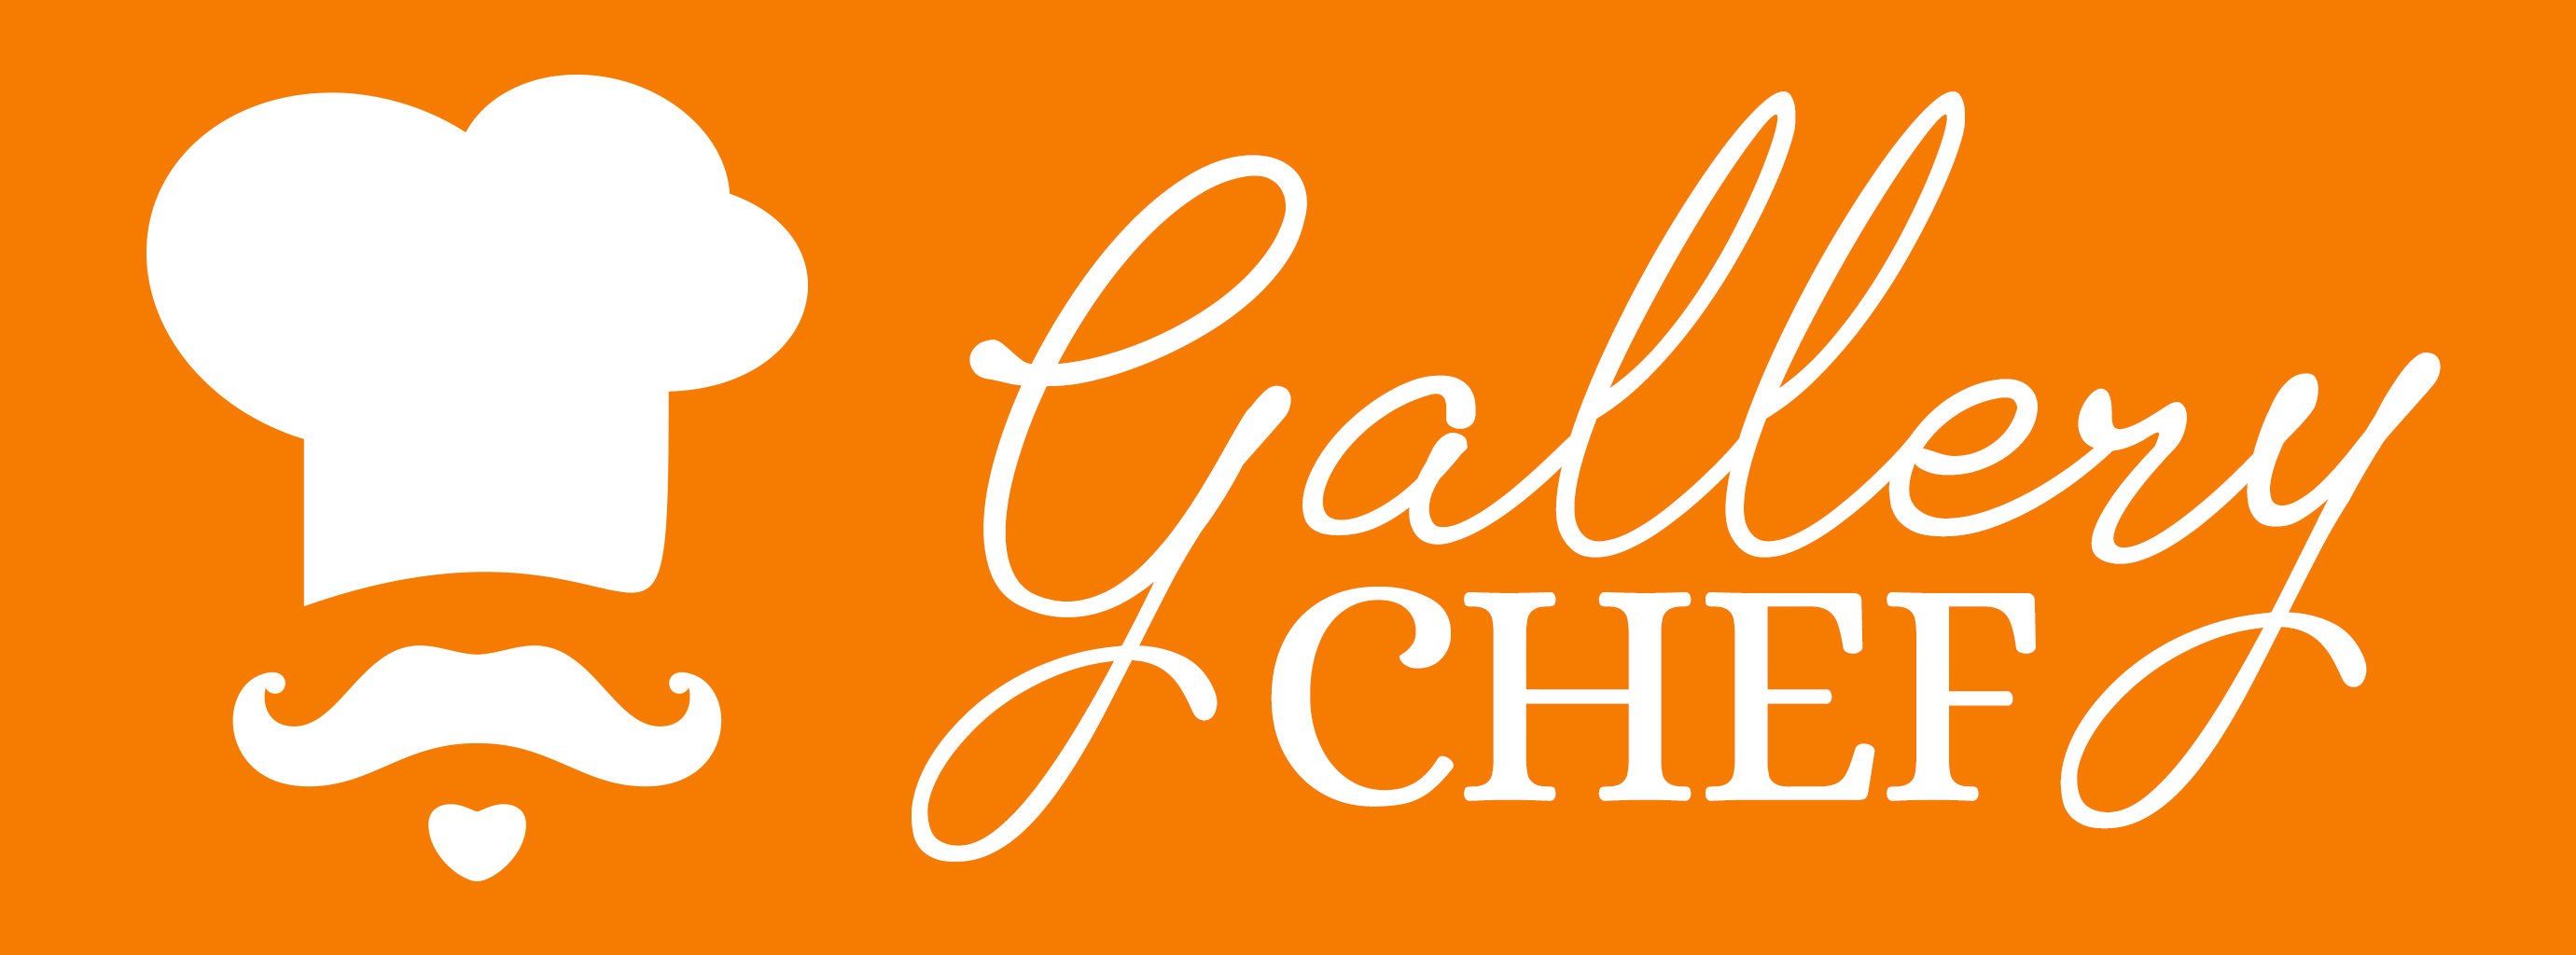 Gallery Chef Logo